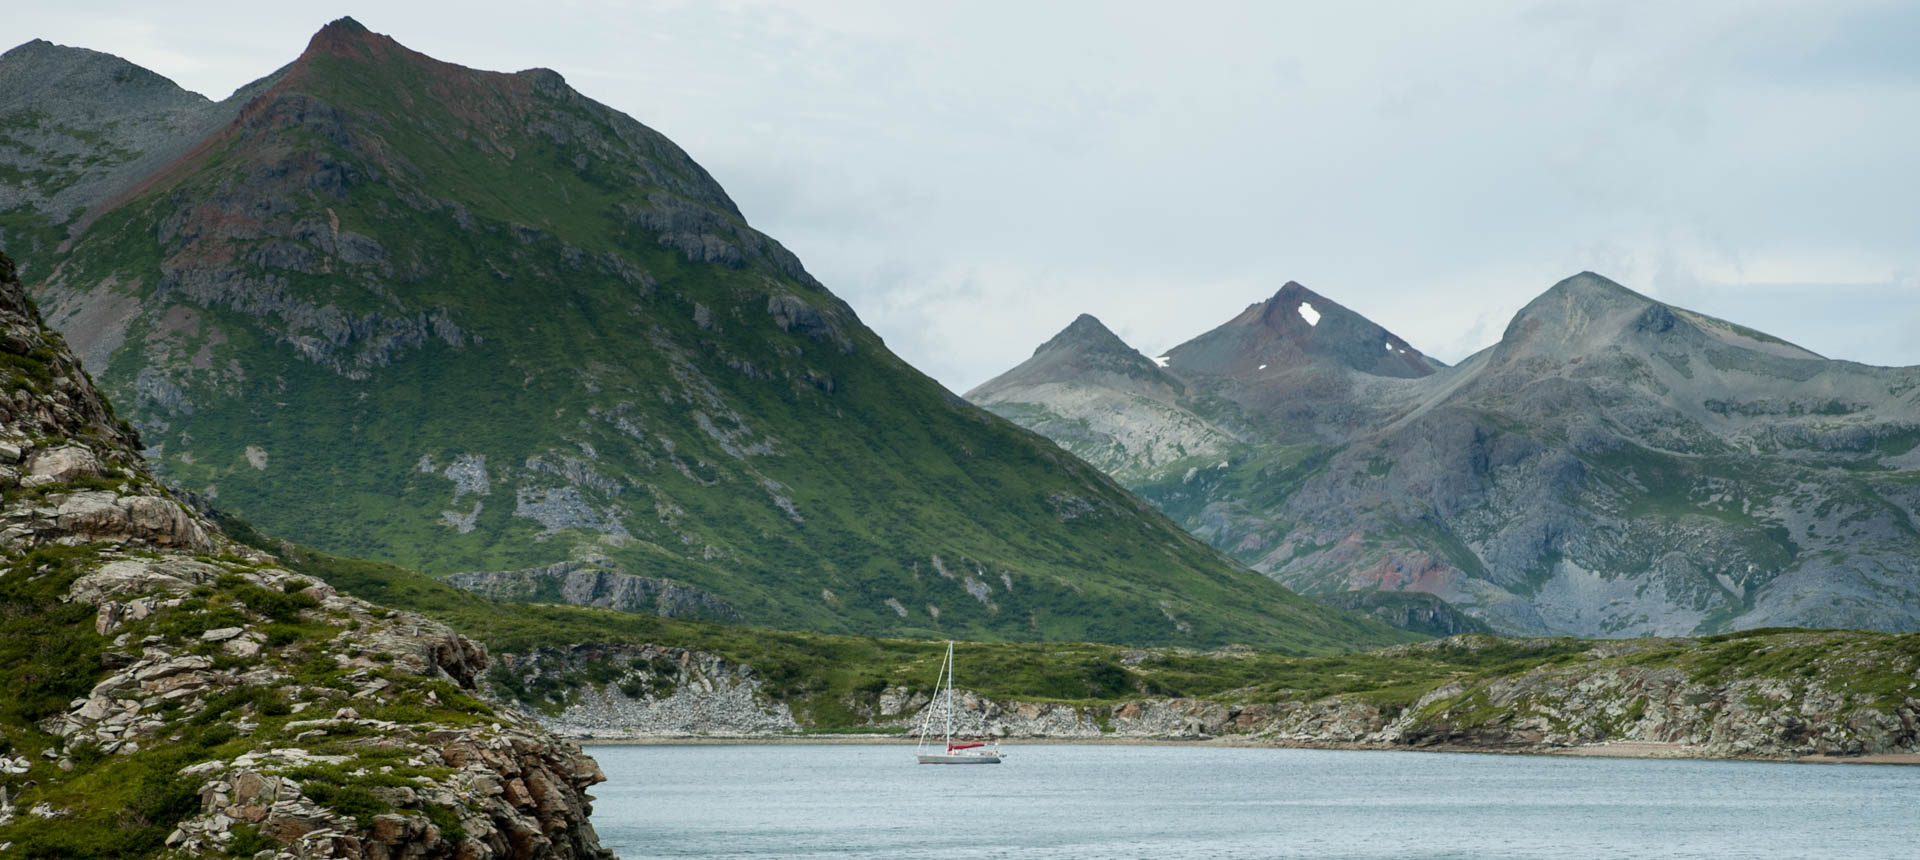 Expedition Yacht Seal sailing in the Alaskan Peninsula